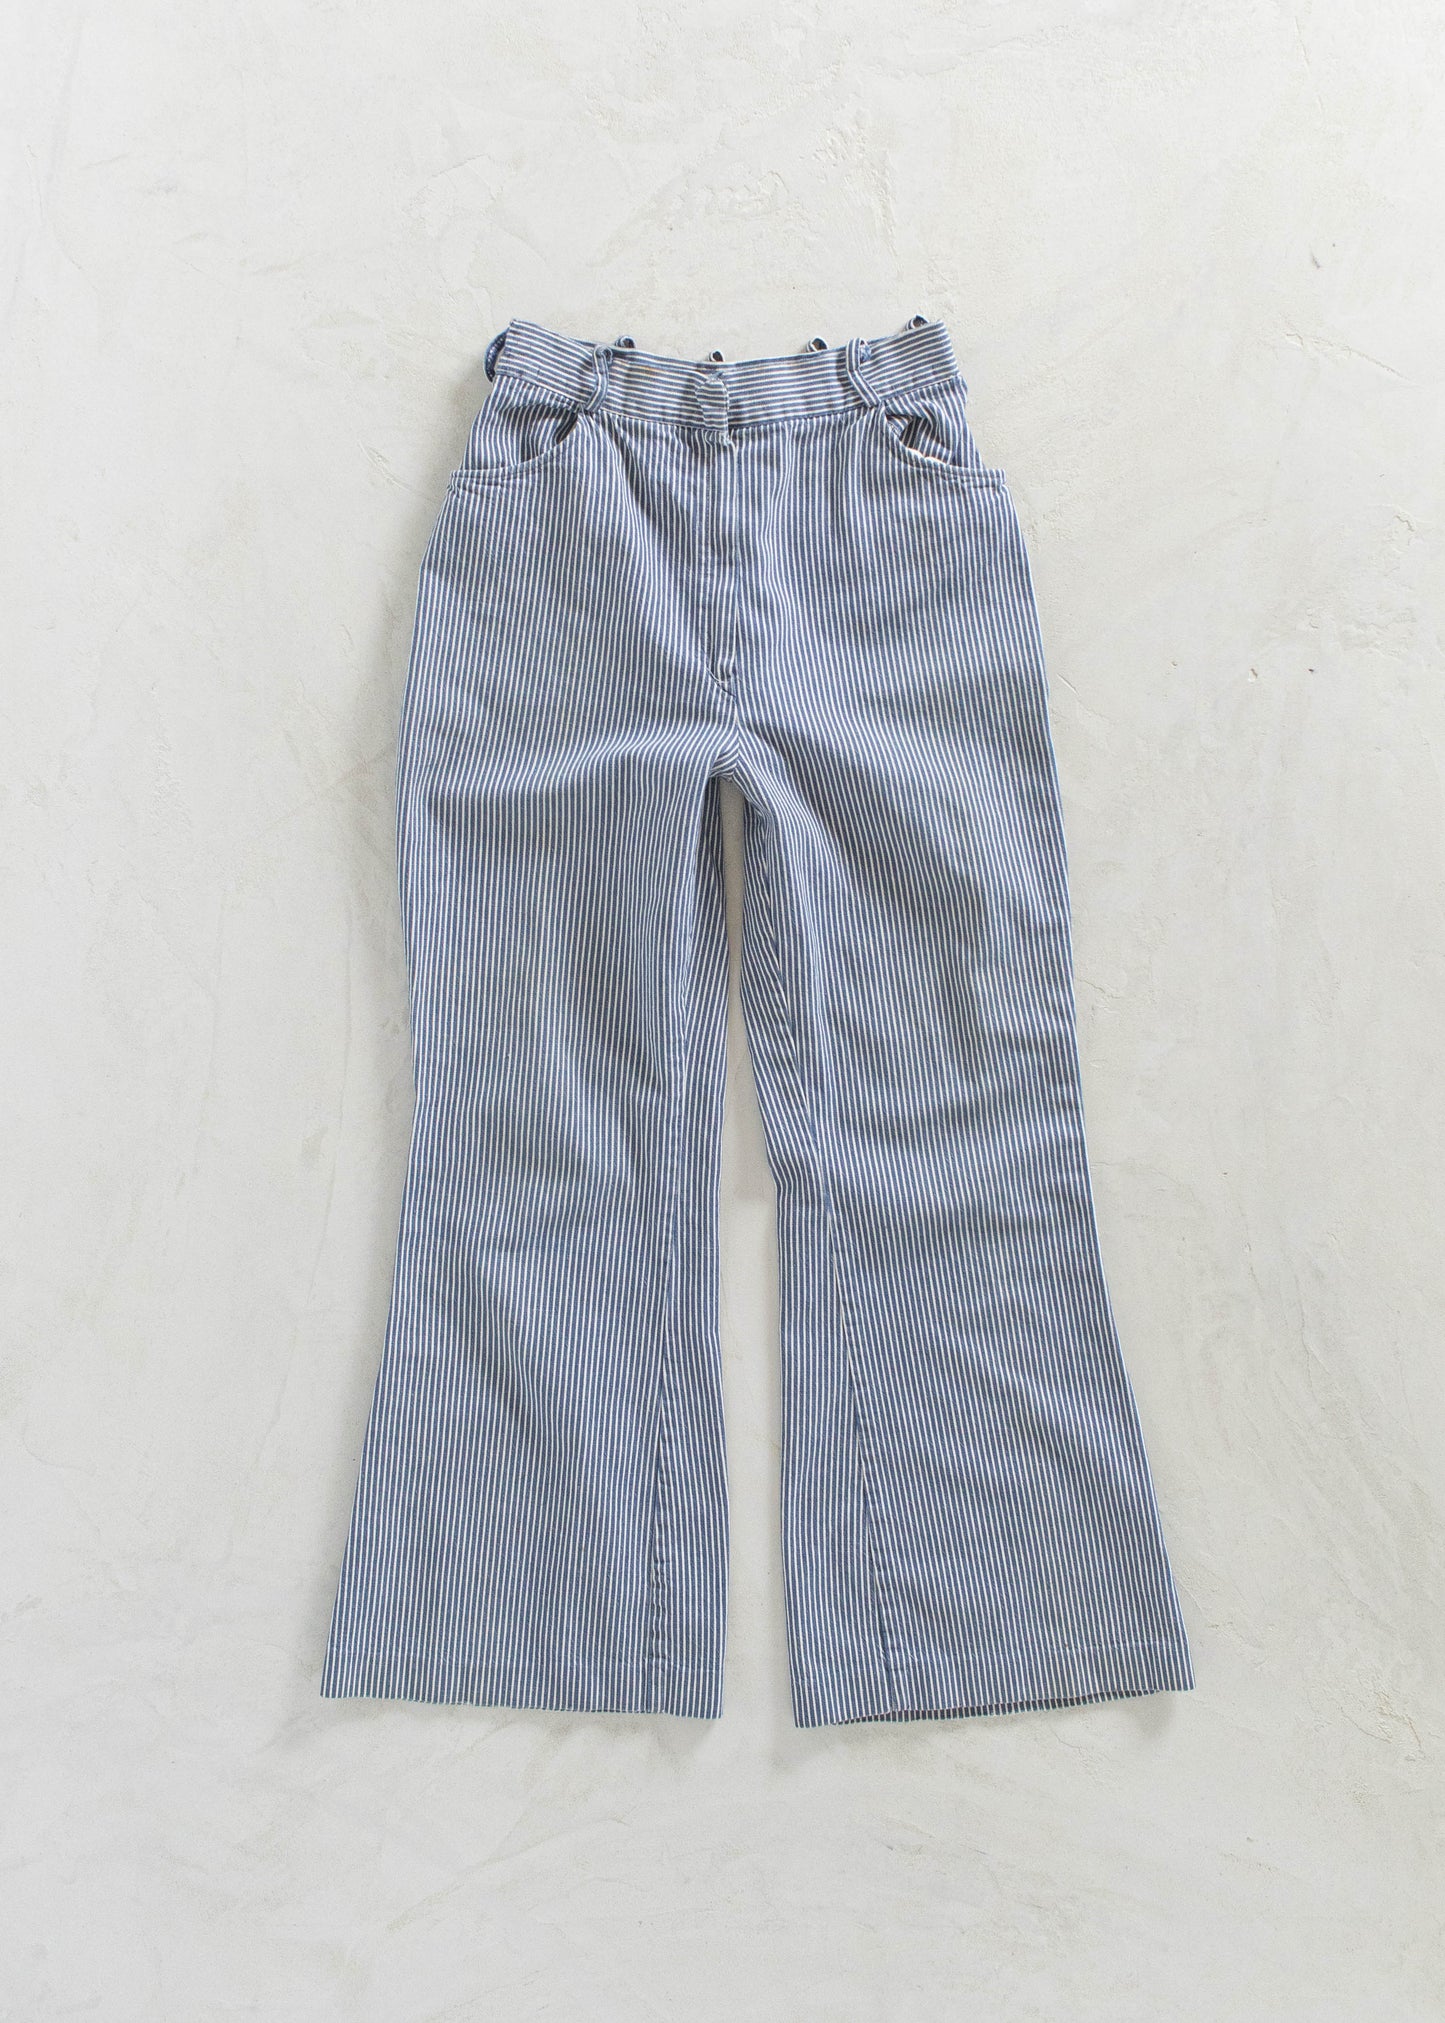 Vintage 1970s Railroad Hickory Stripe Flare Pants Size Women's 24